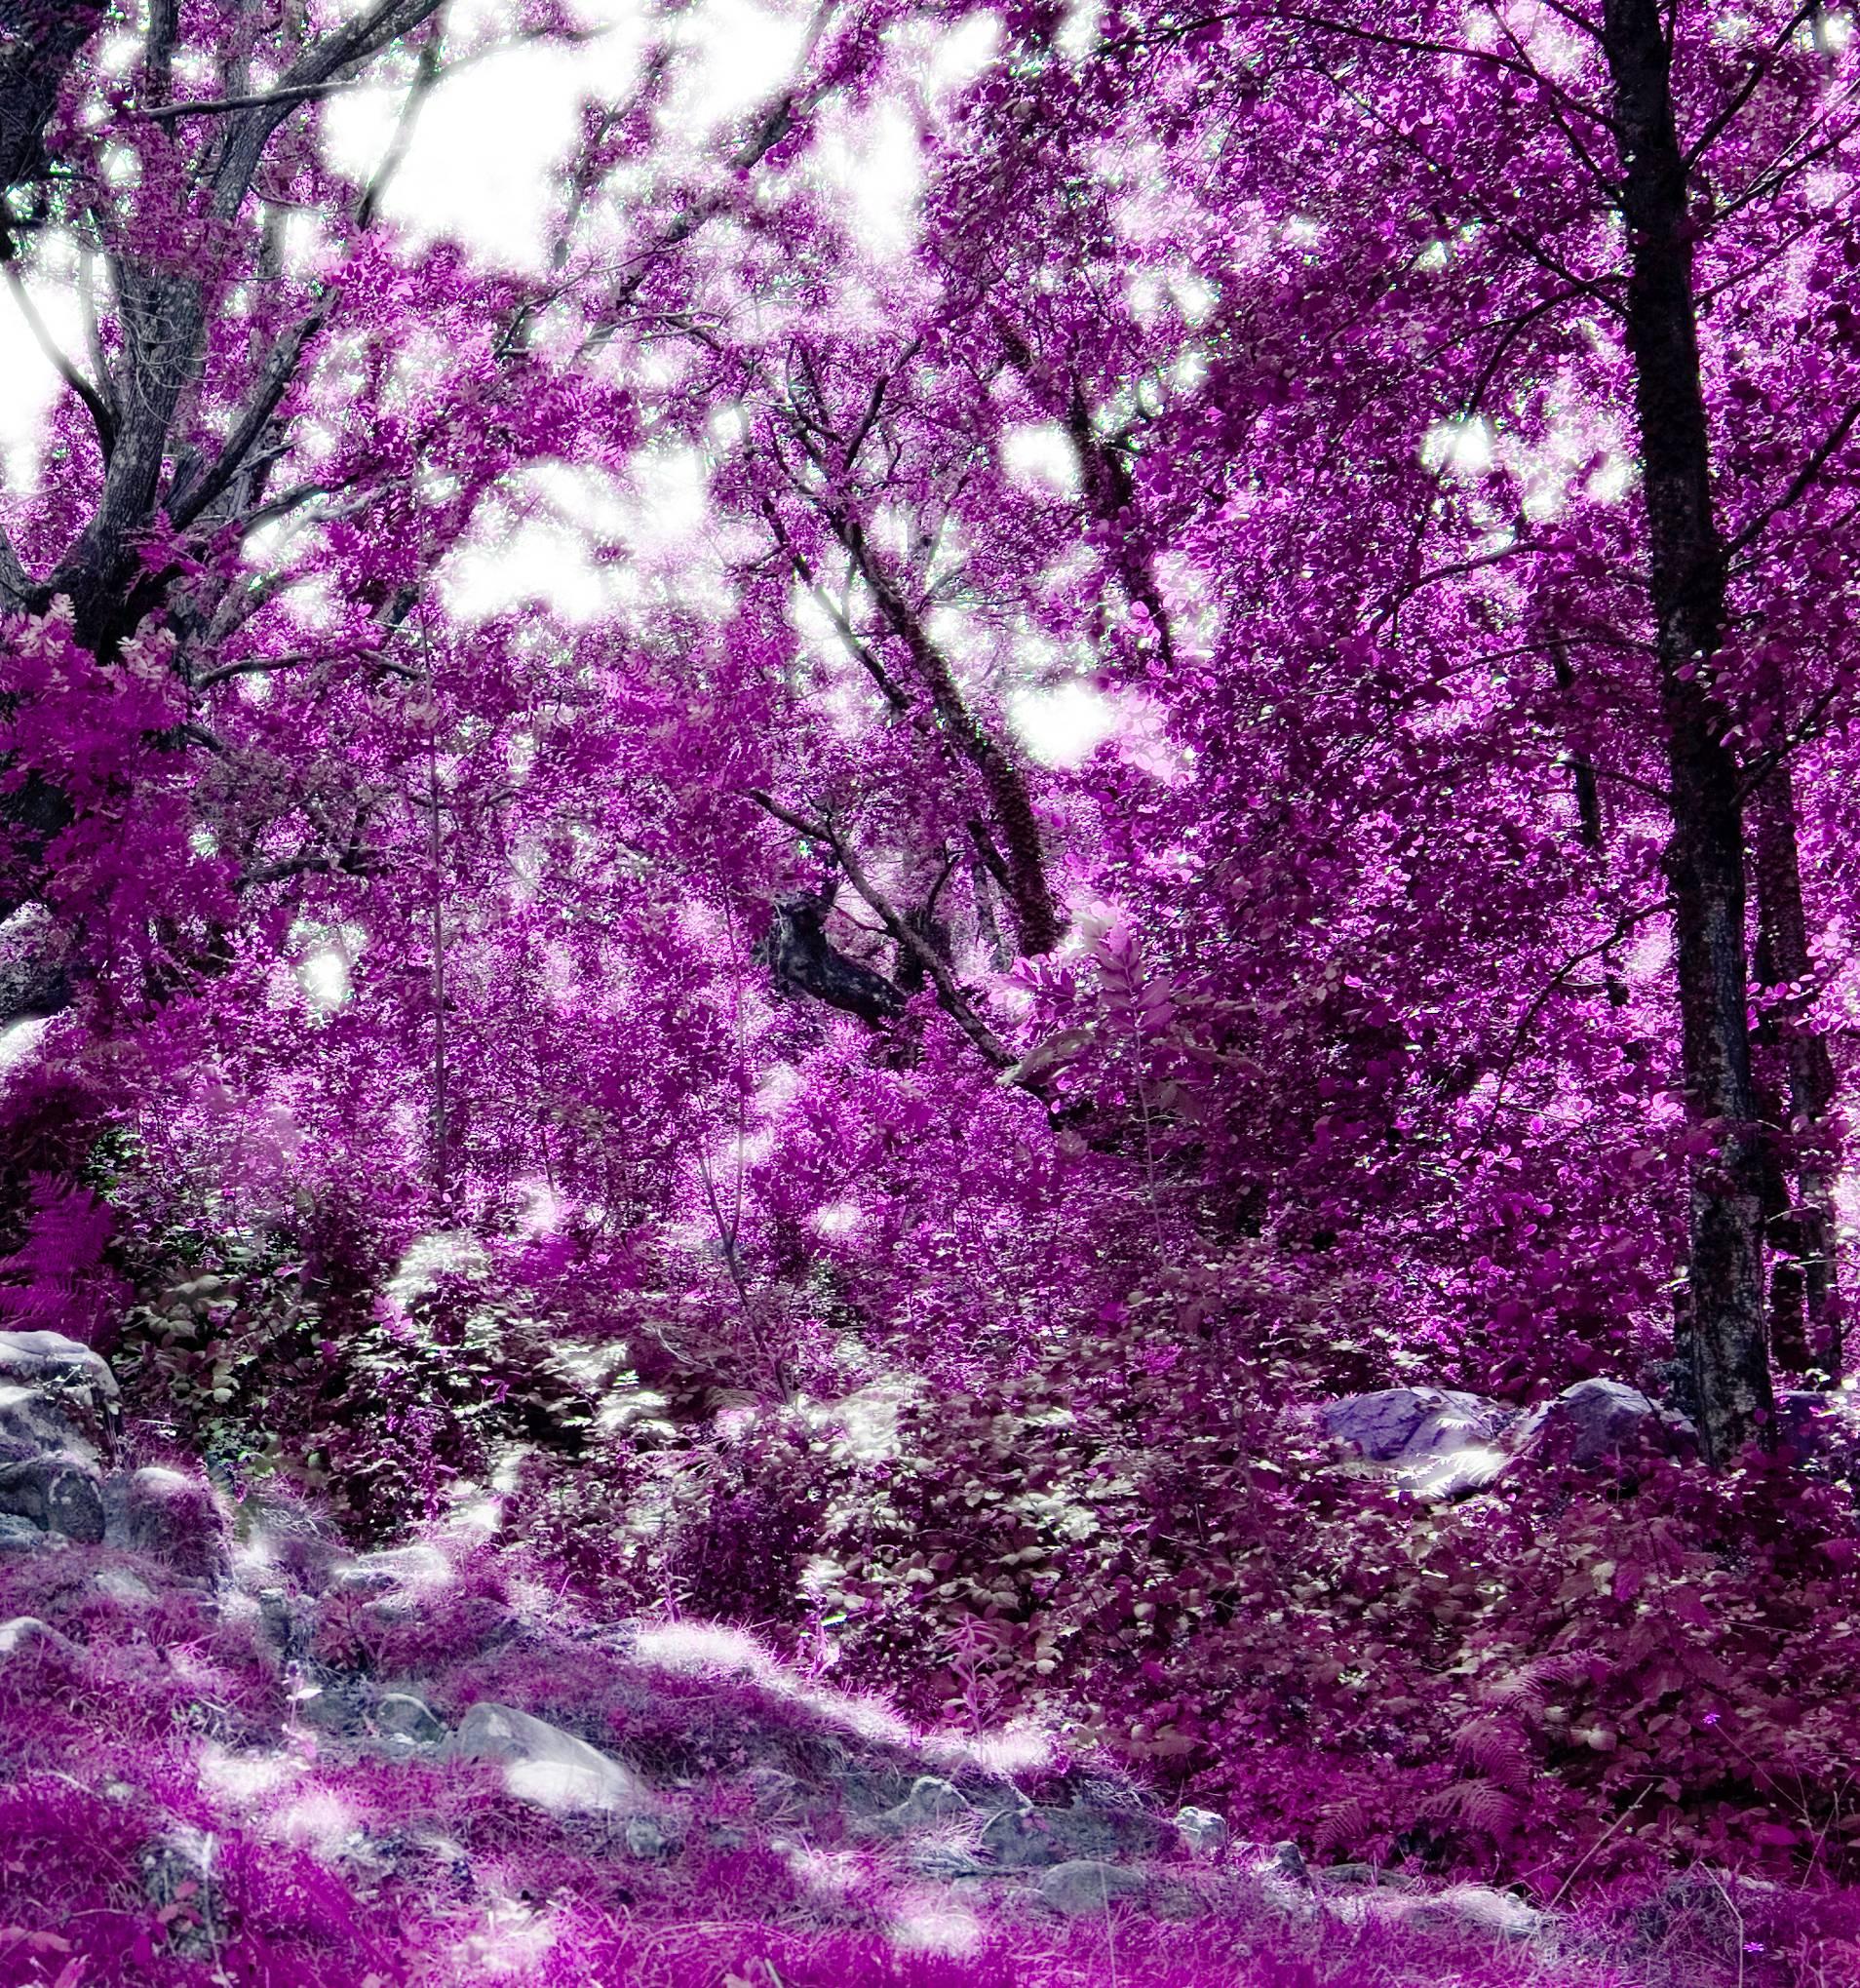 Wonderland, Landscape with old Tree, Magenta/Pink tone - Purple Landscape Photograph by Albert Delamour